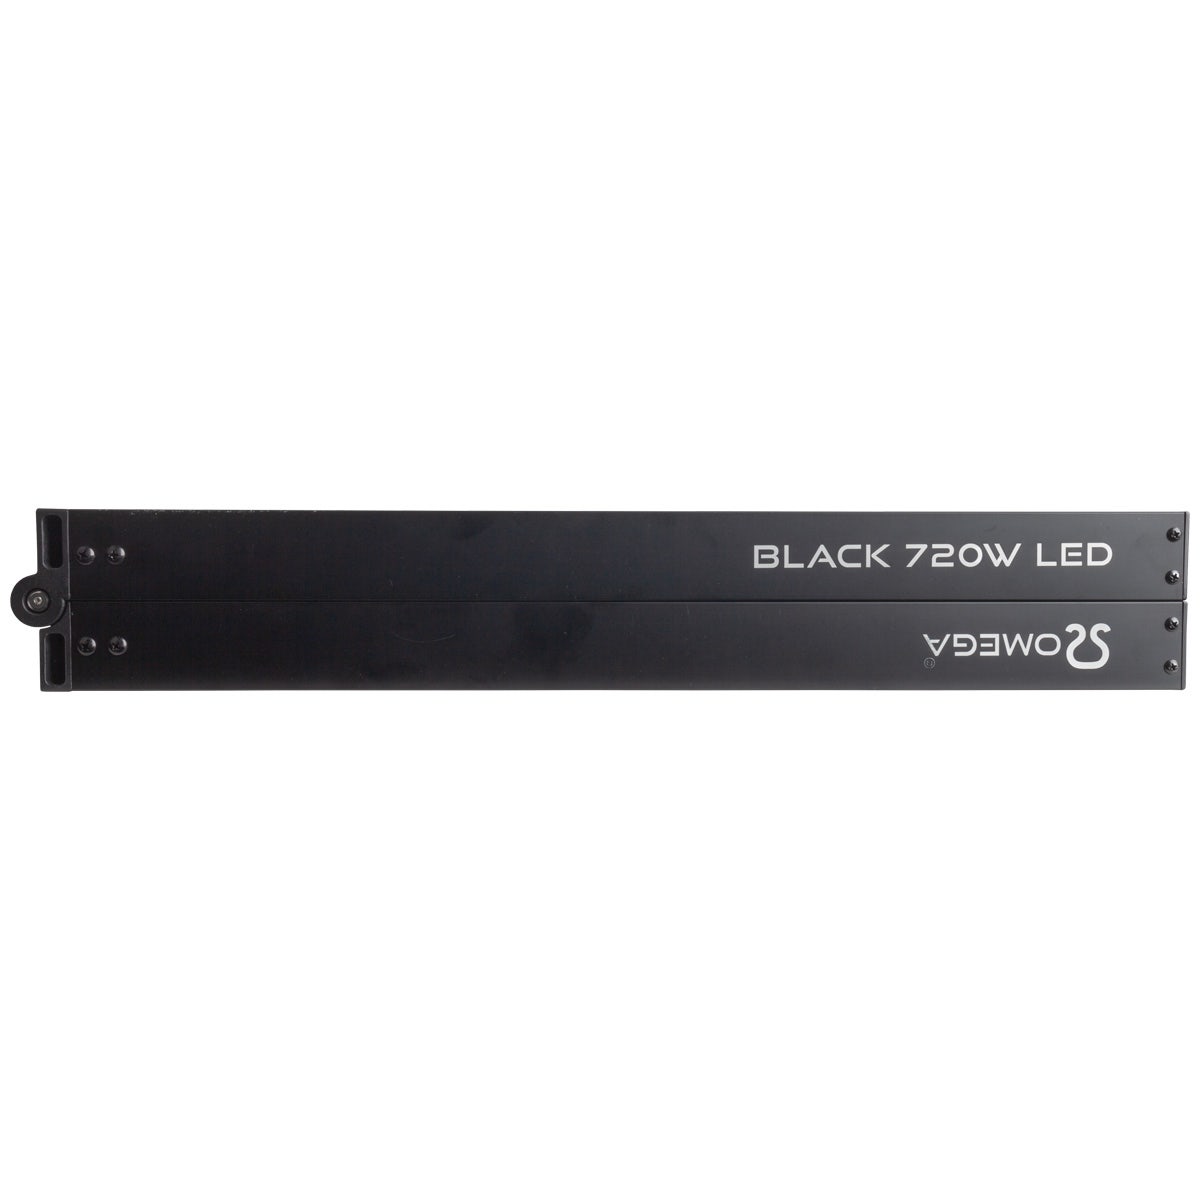 Omega Black 720w LED Grow Light